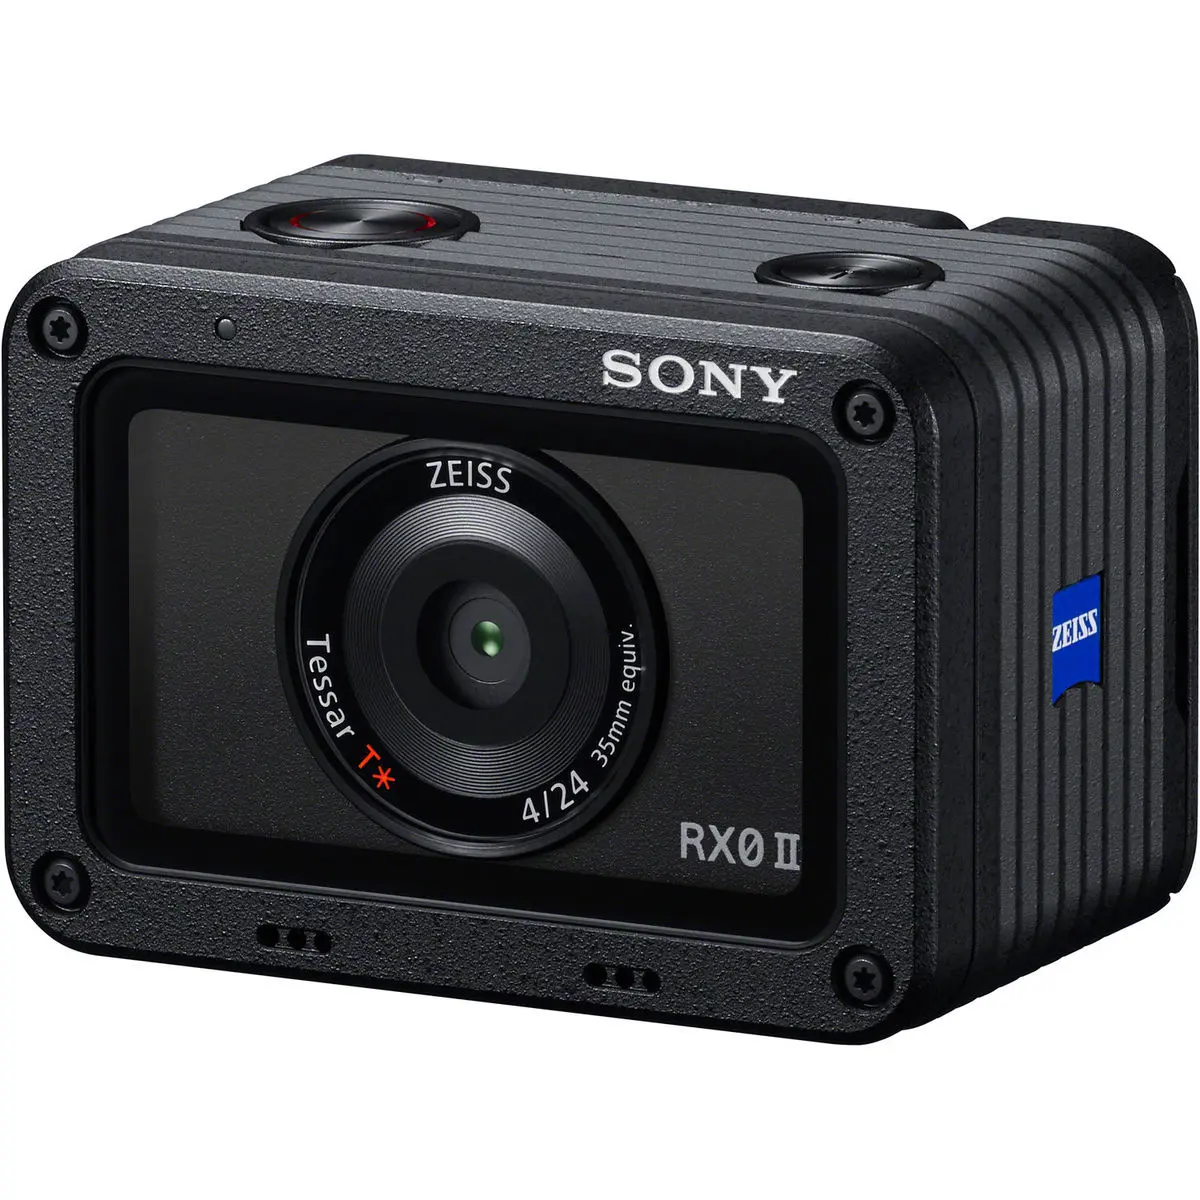 Main Image Sony Cyber-shot DSC-RX0 II + Shooting grip Camera